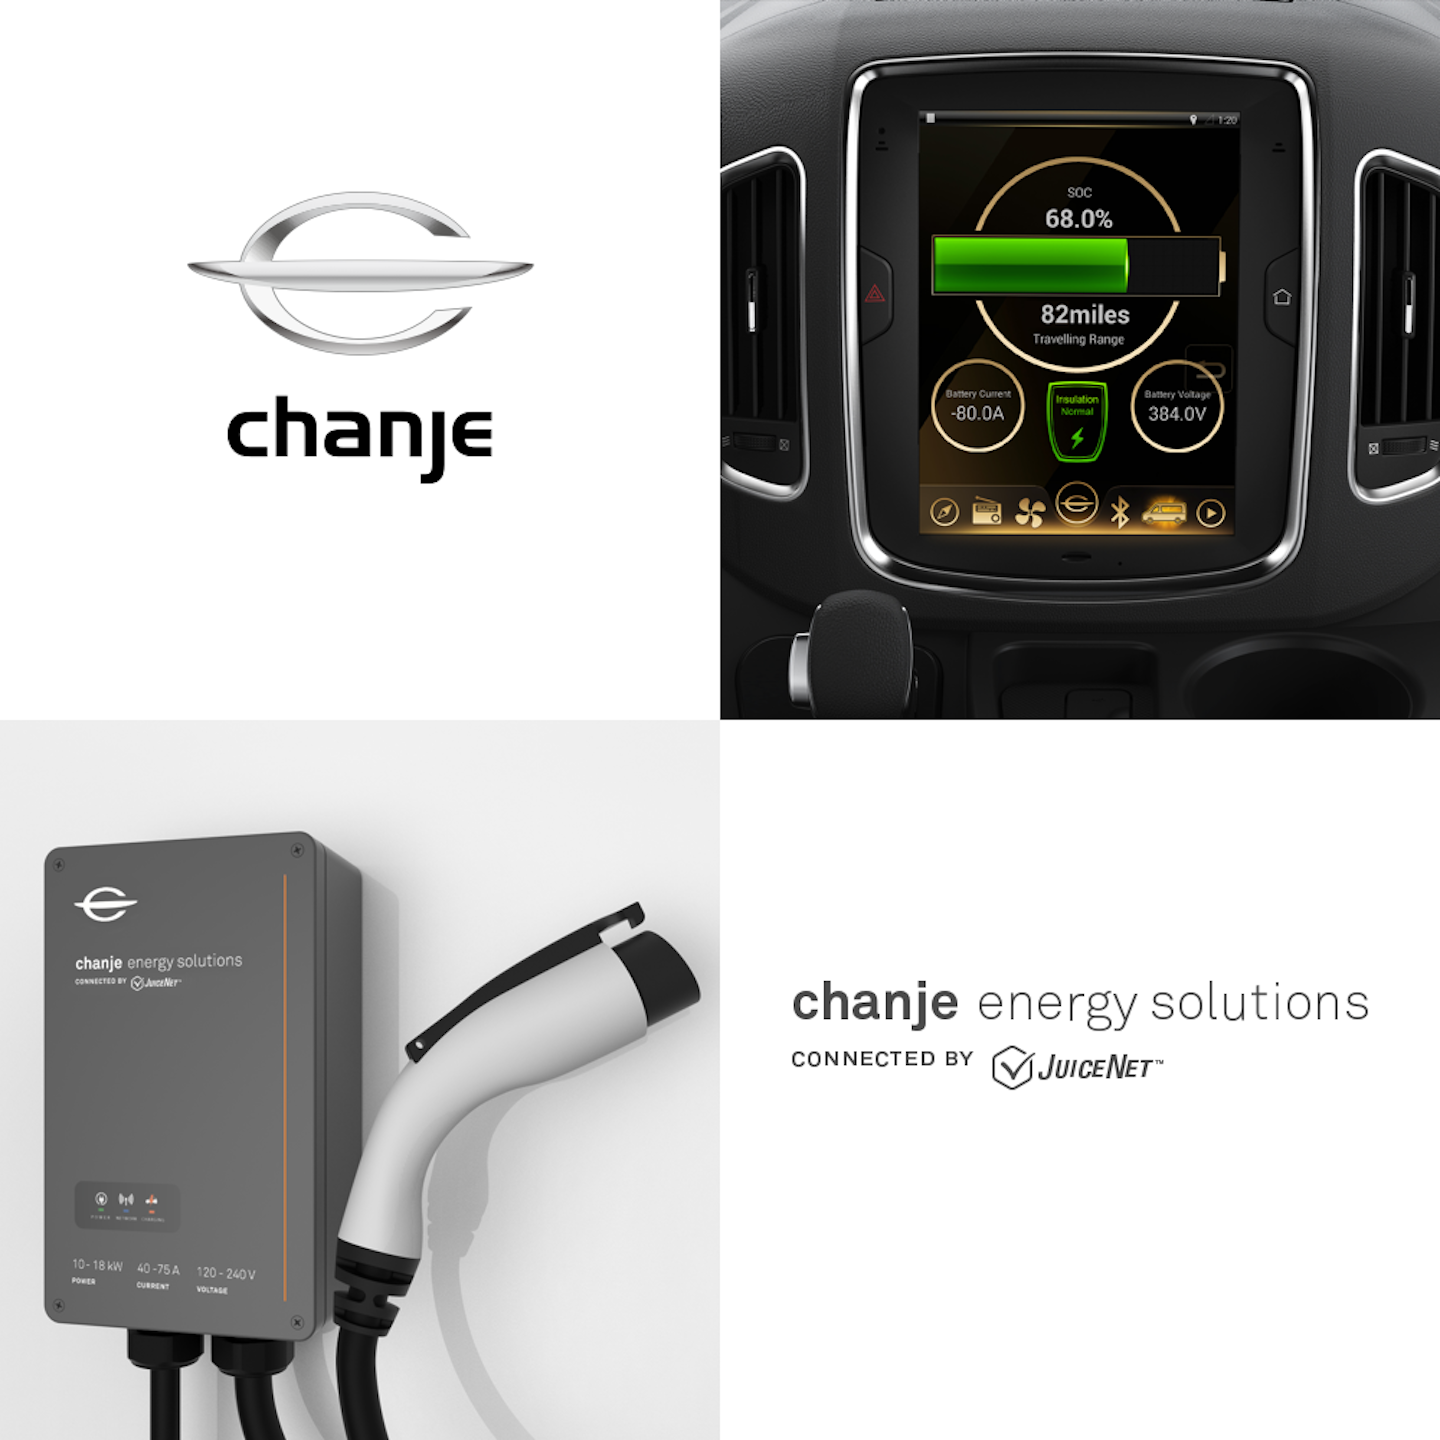 Chanje Partnering with eMotorWerks on EnergyasaService Vehicle